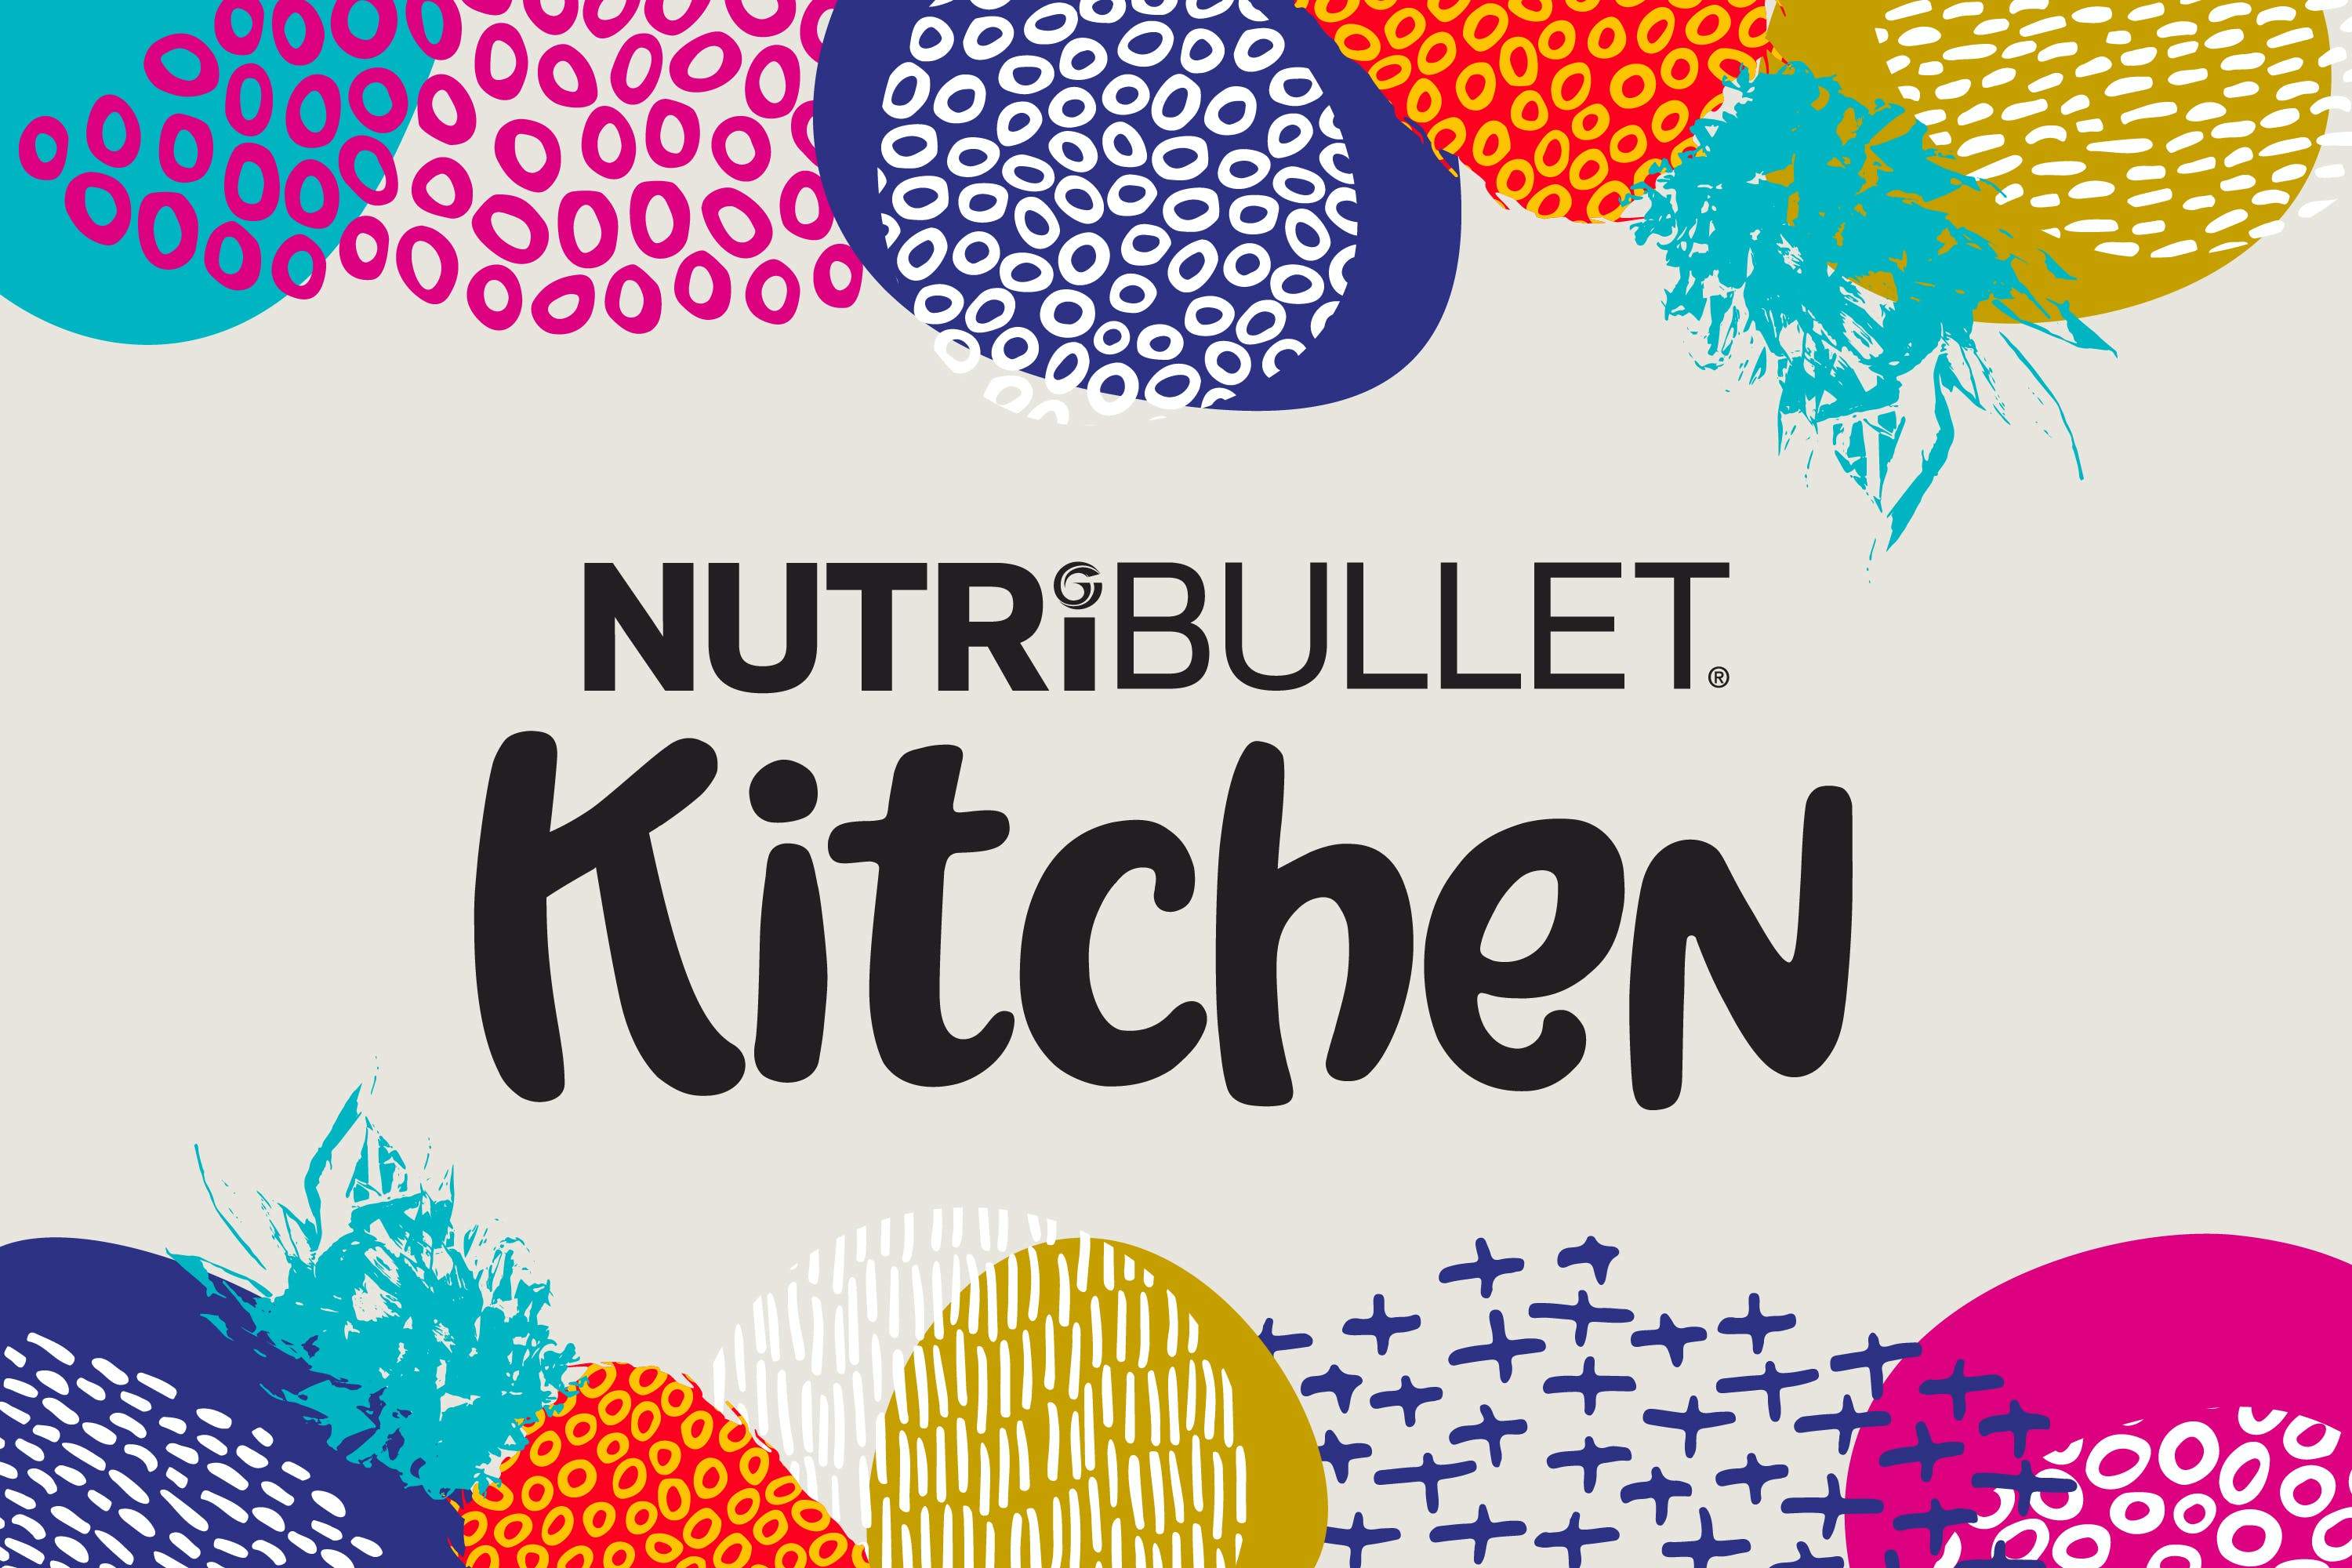 NutriBullet Kitchen Podcast Episode 1 Interview with Magdalena Wszelaki